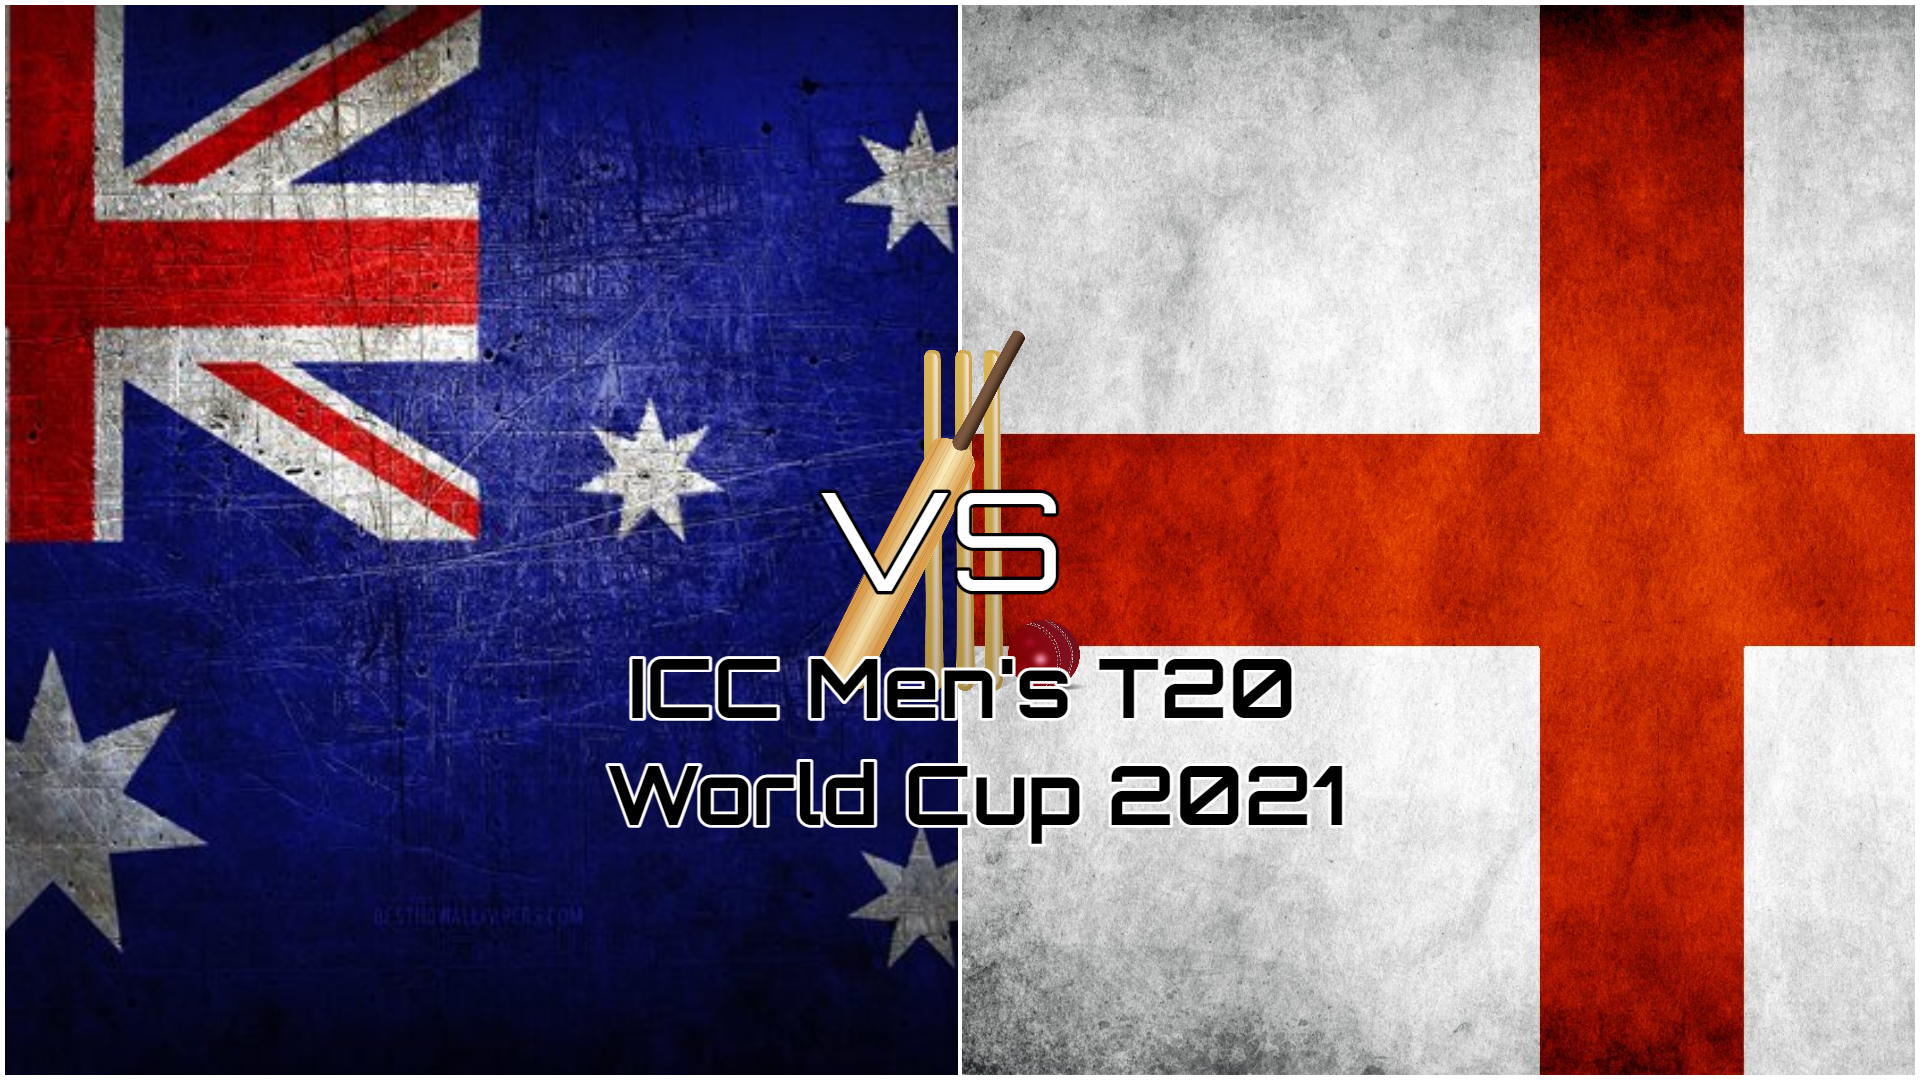 Australia vs England